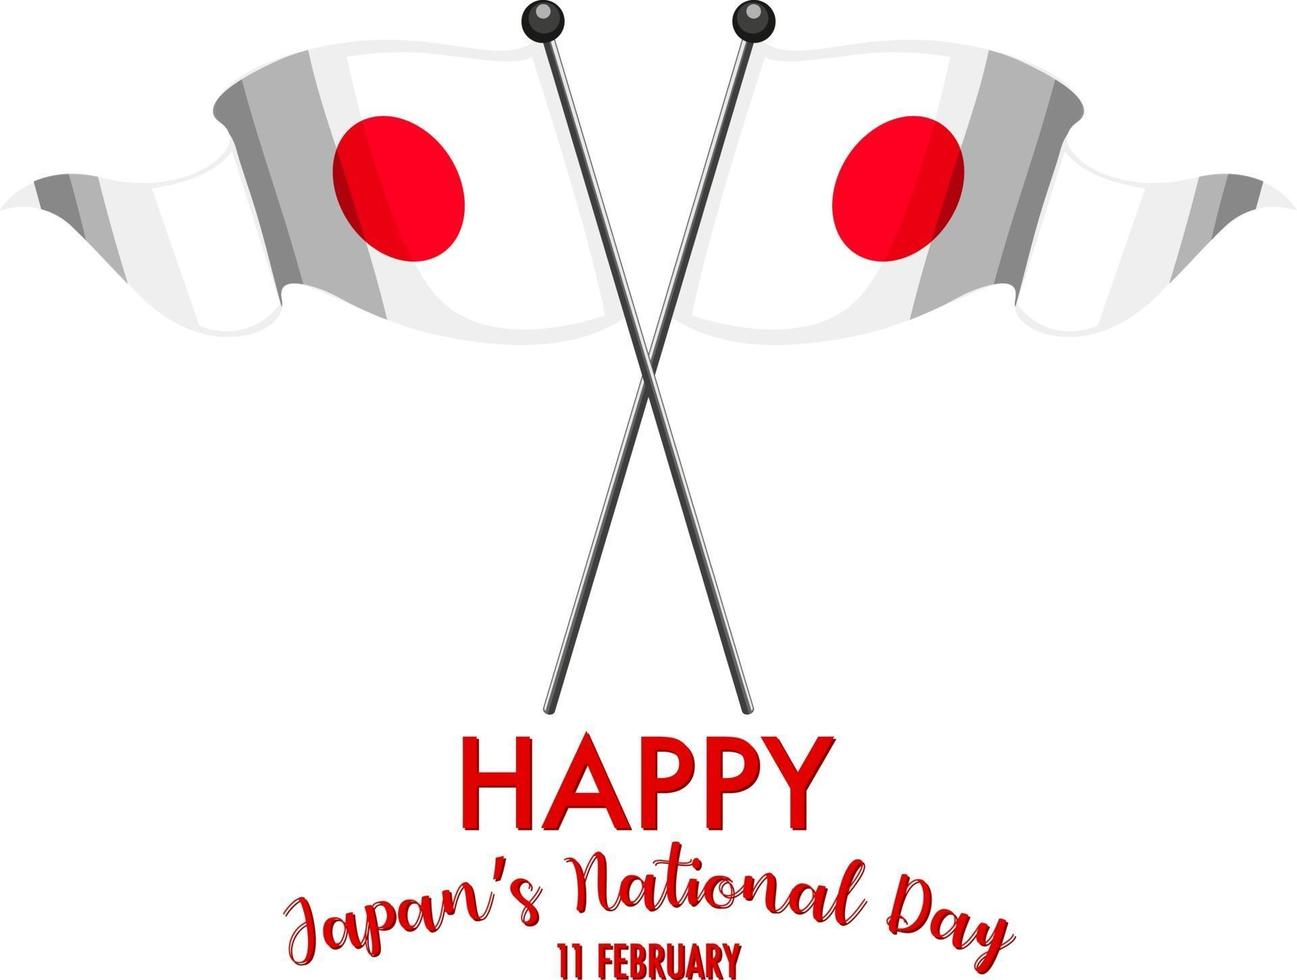 happy japan's nationale dagbanner met vlag van japan vector